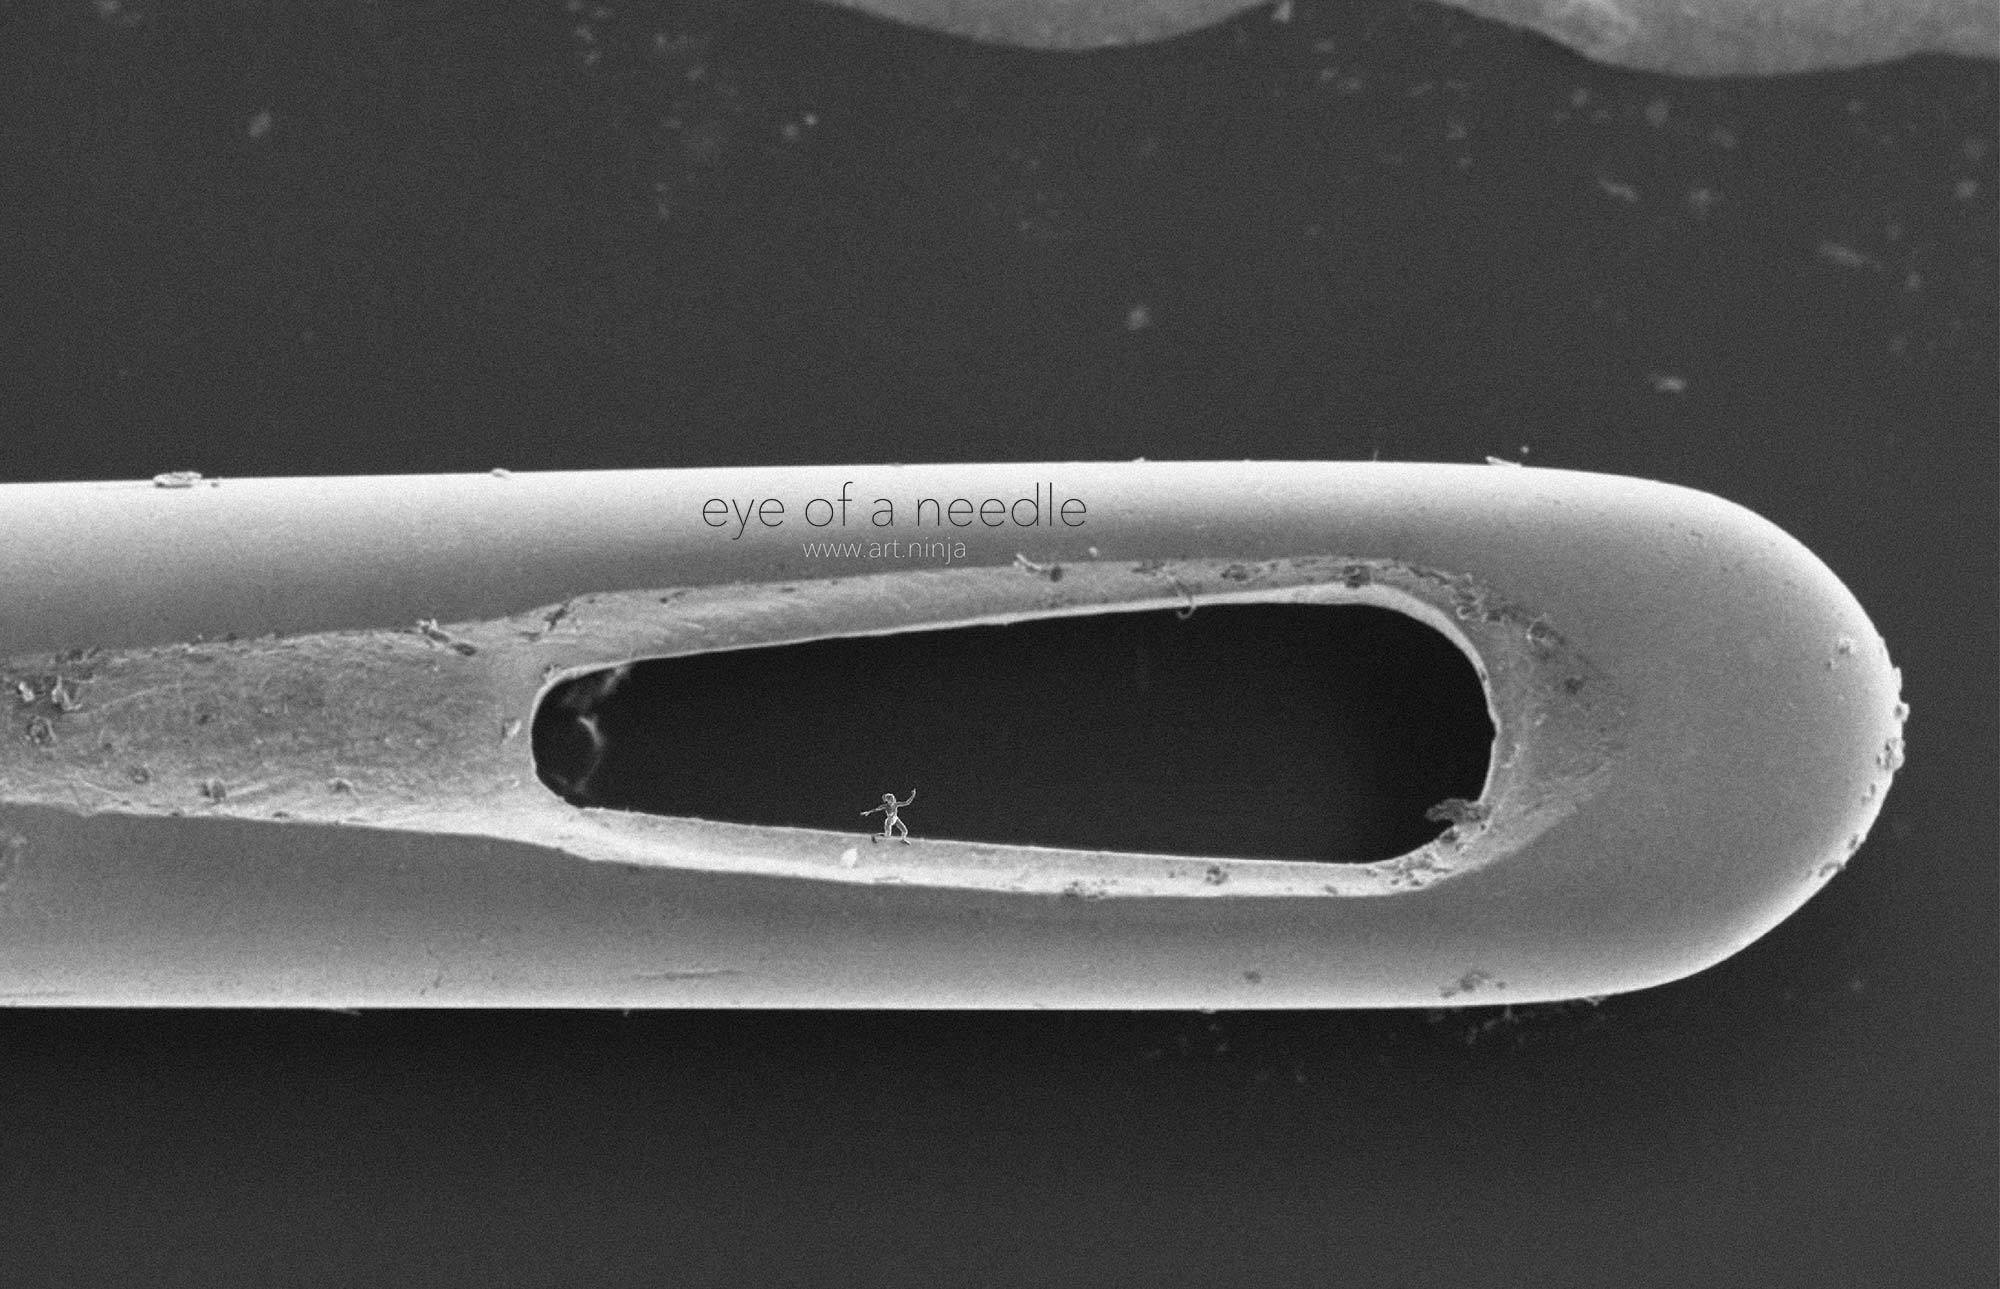 nano sculpture - eye of a needle